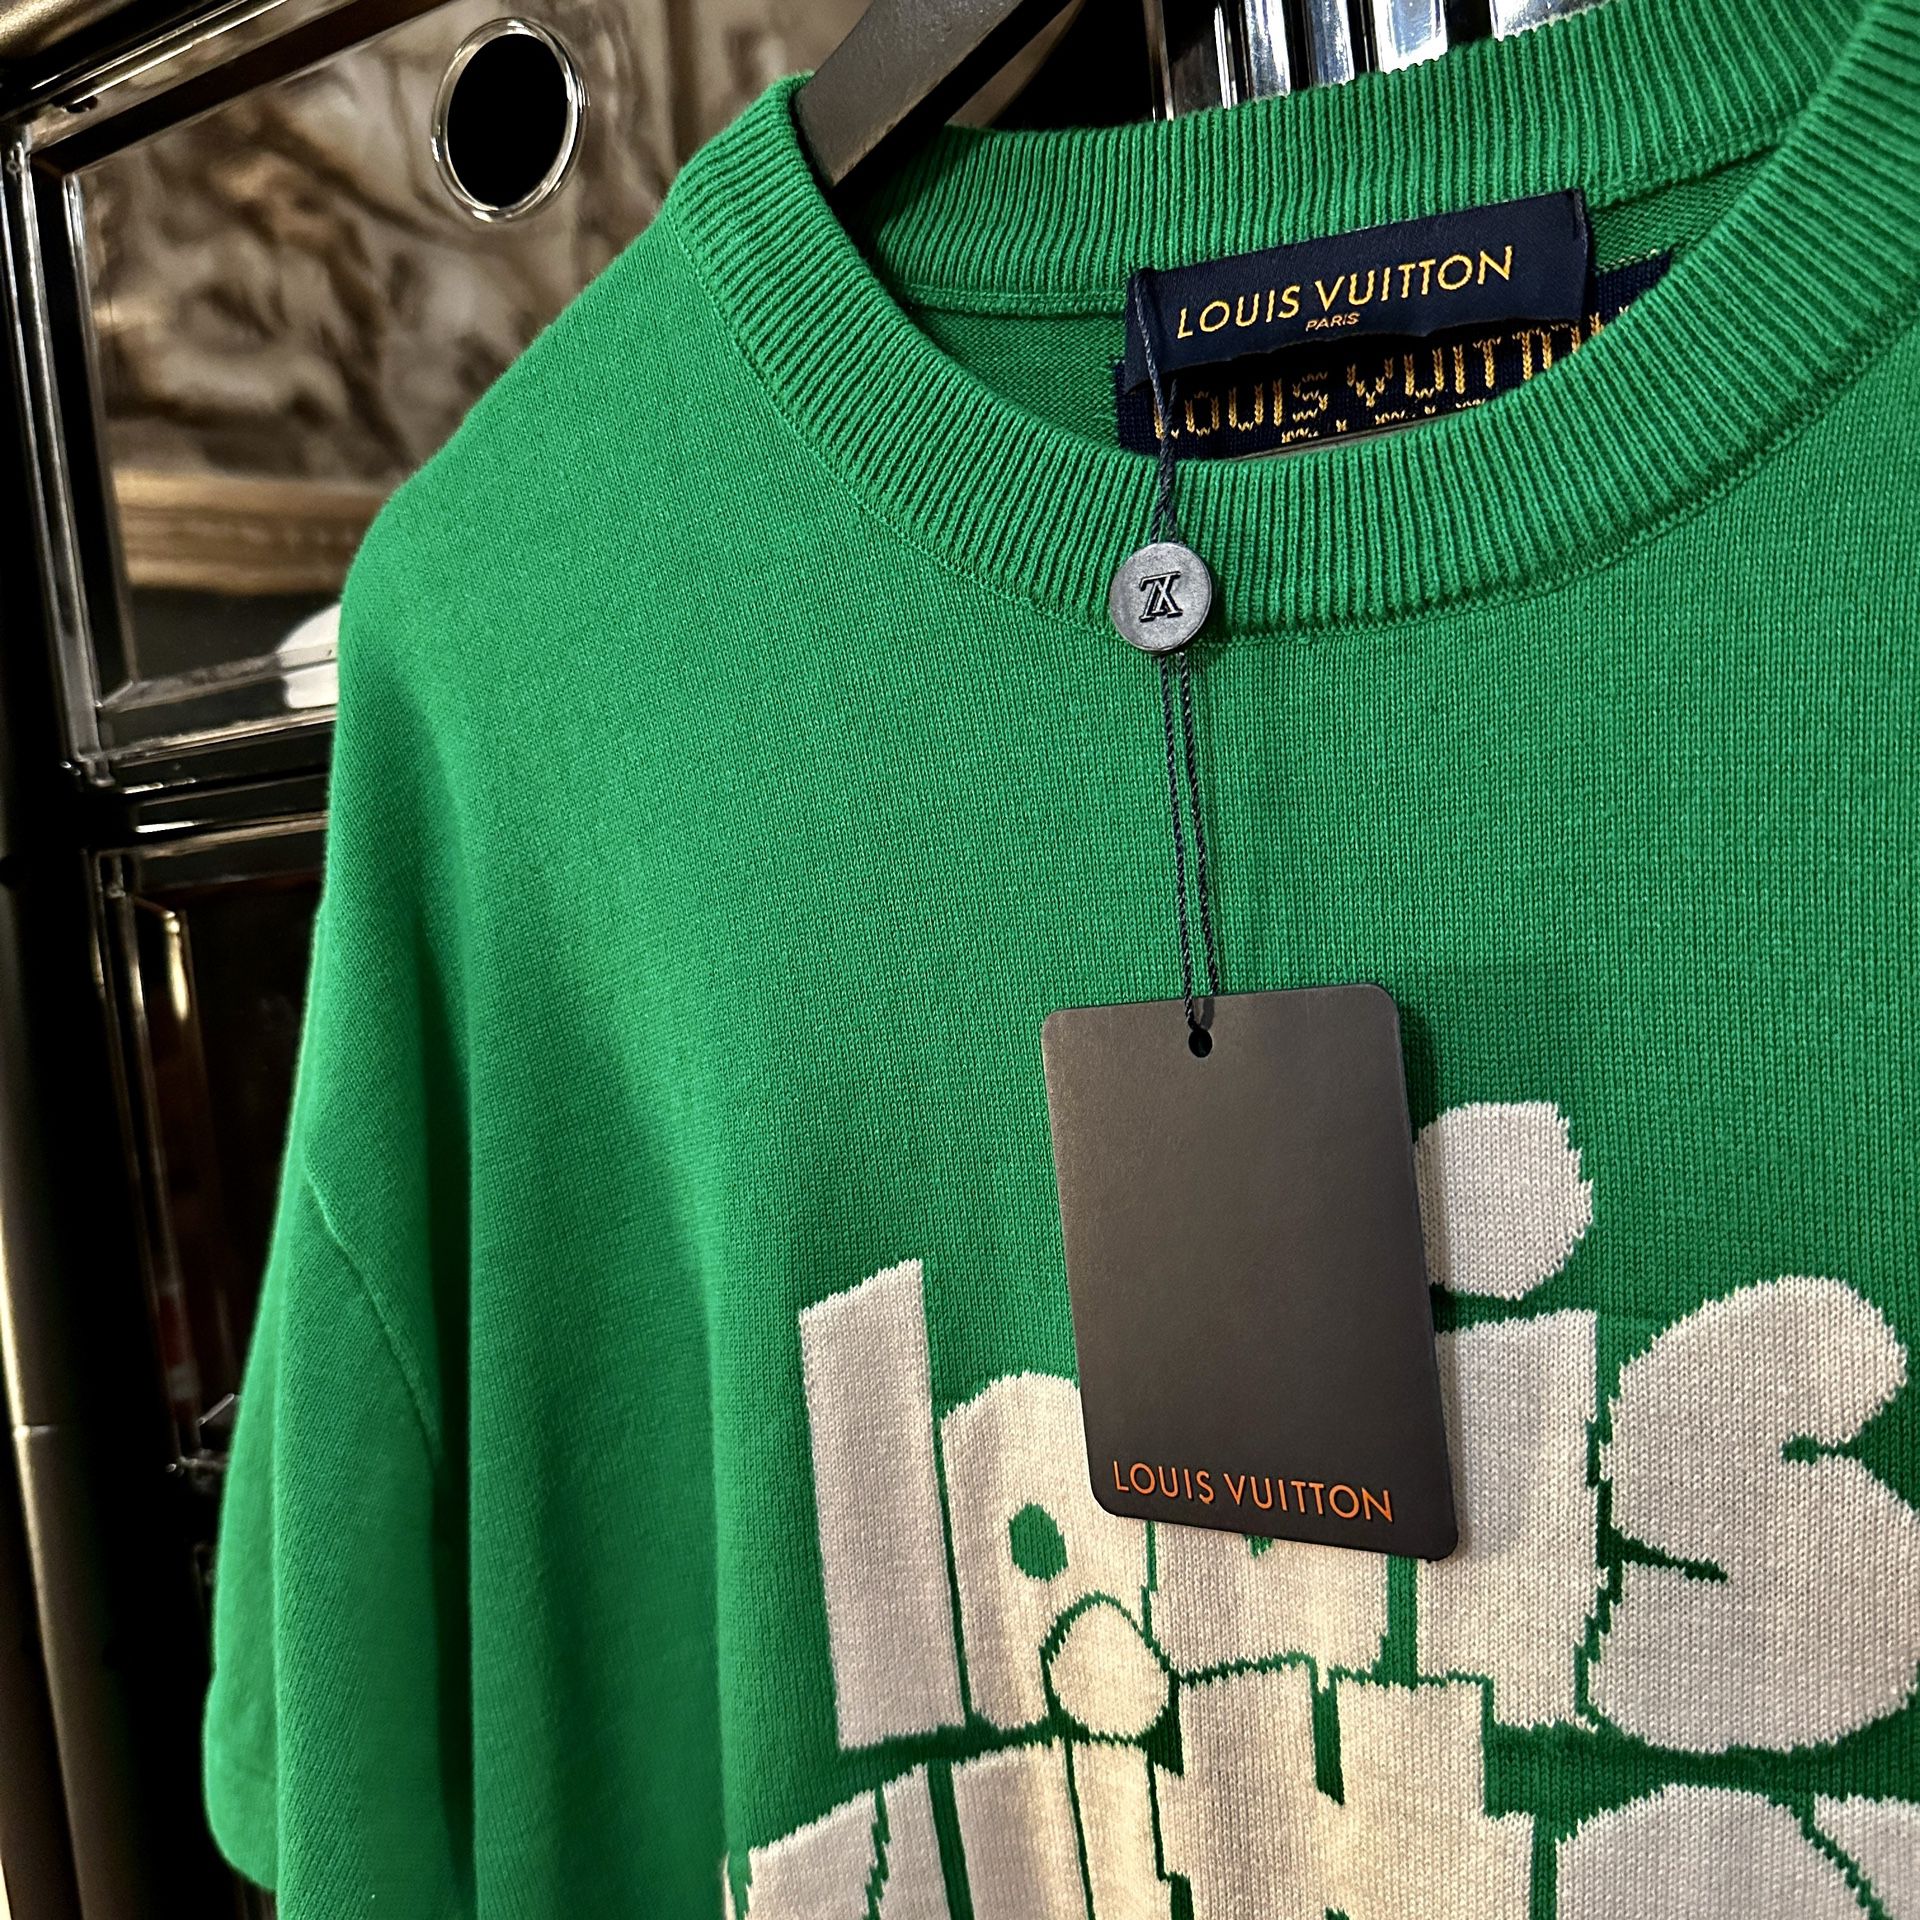 Lv Louis Vuitton Shirt Men Size Xl Brown for Sale in Medley, FL - OfferUp